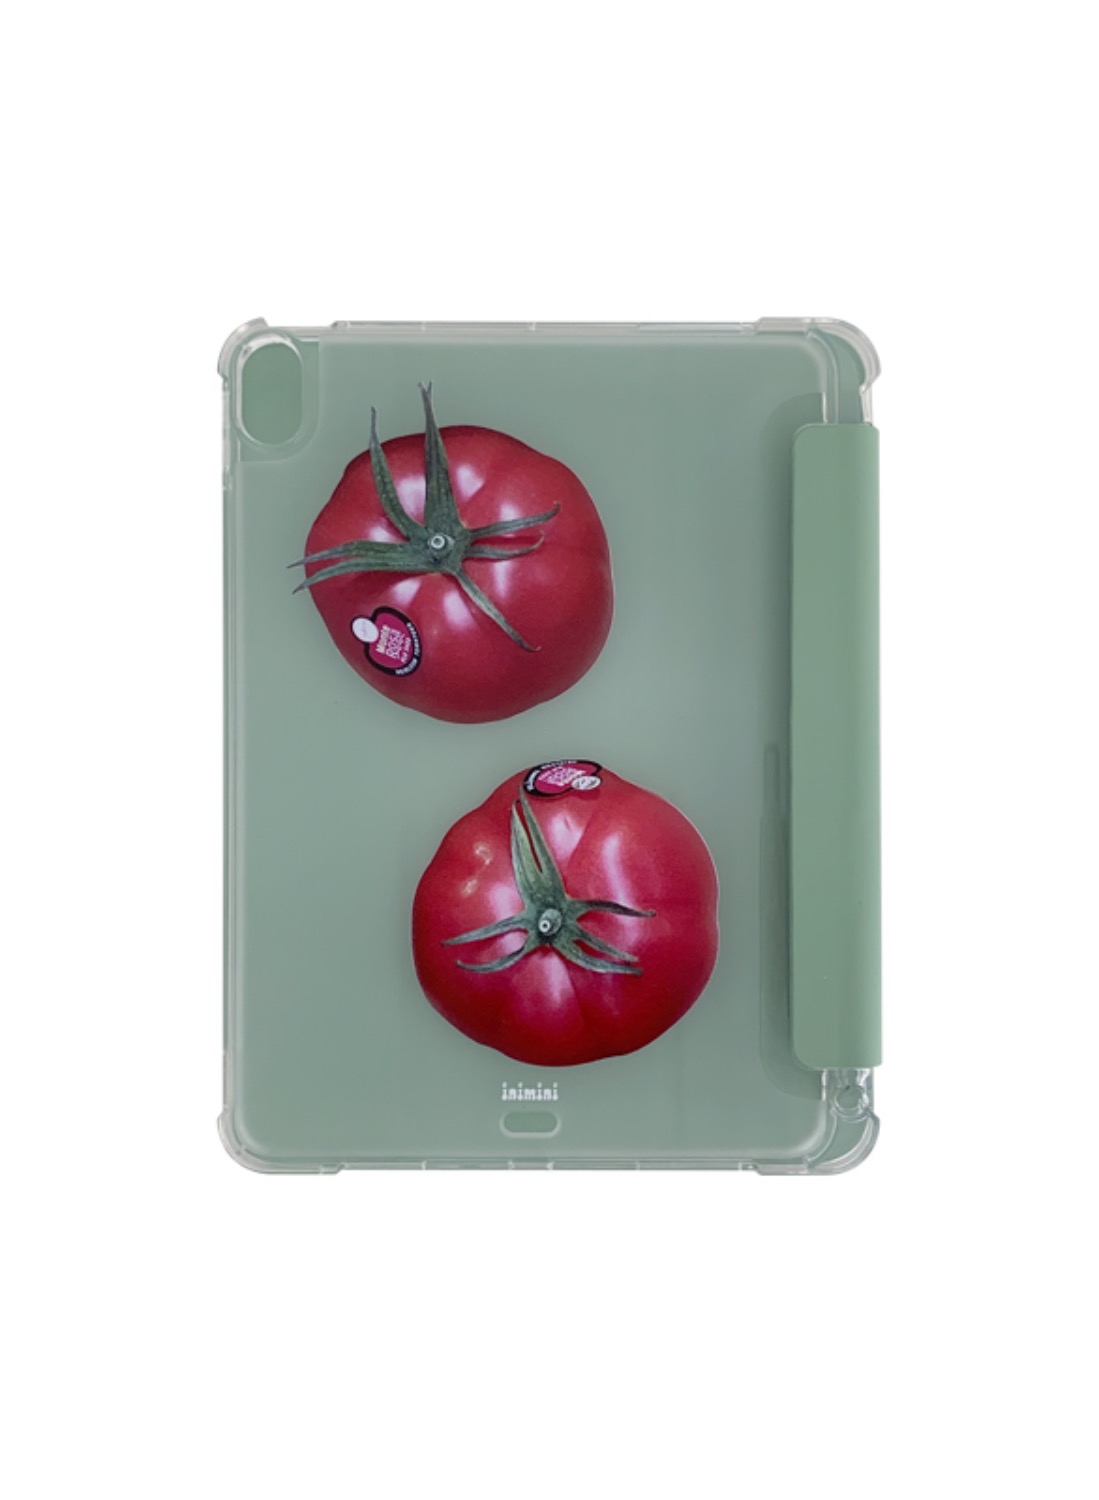 tomato  ipad case